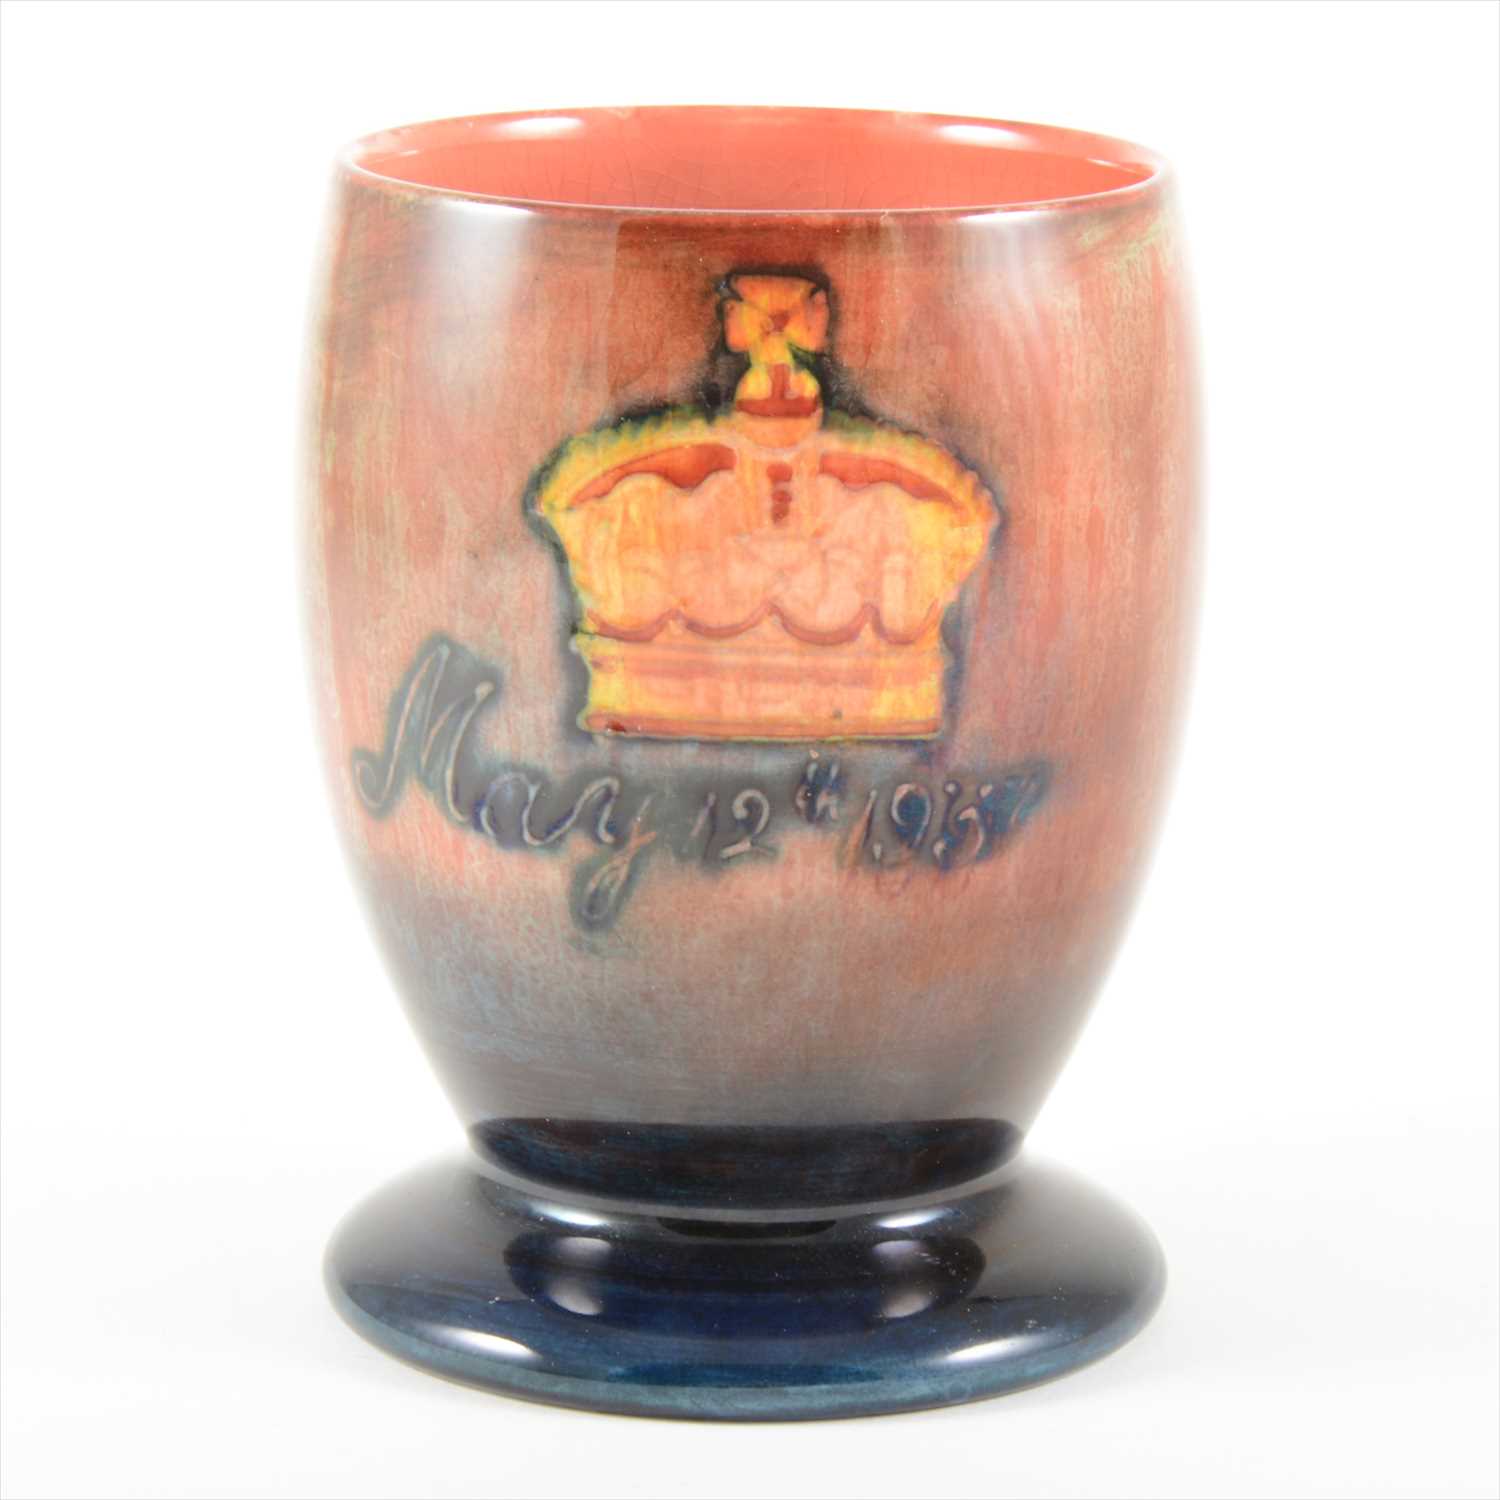 Lot 40 - A commemorative flambé vase, by William Moorcroft, 1937.